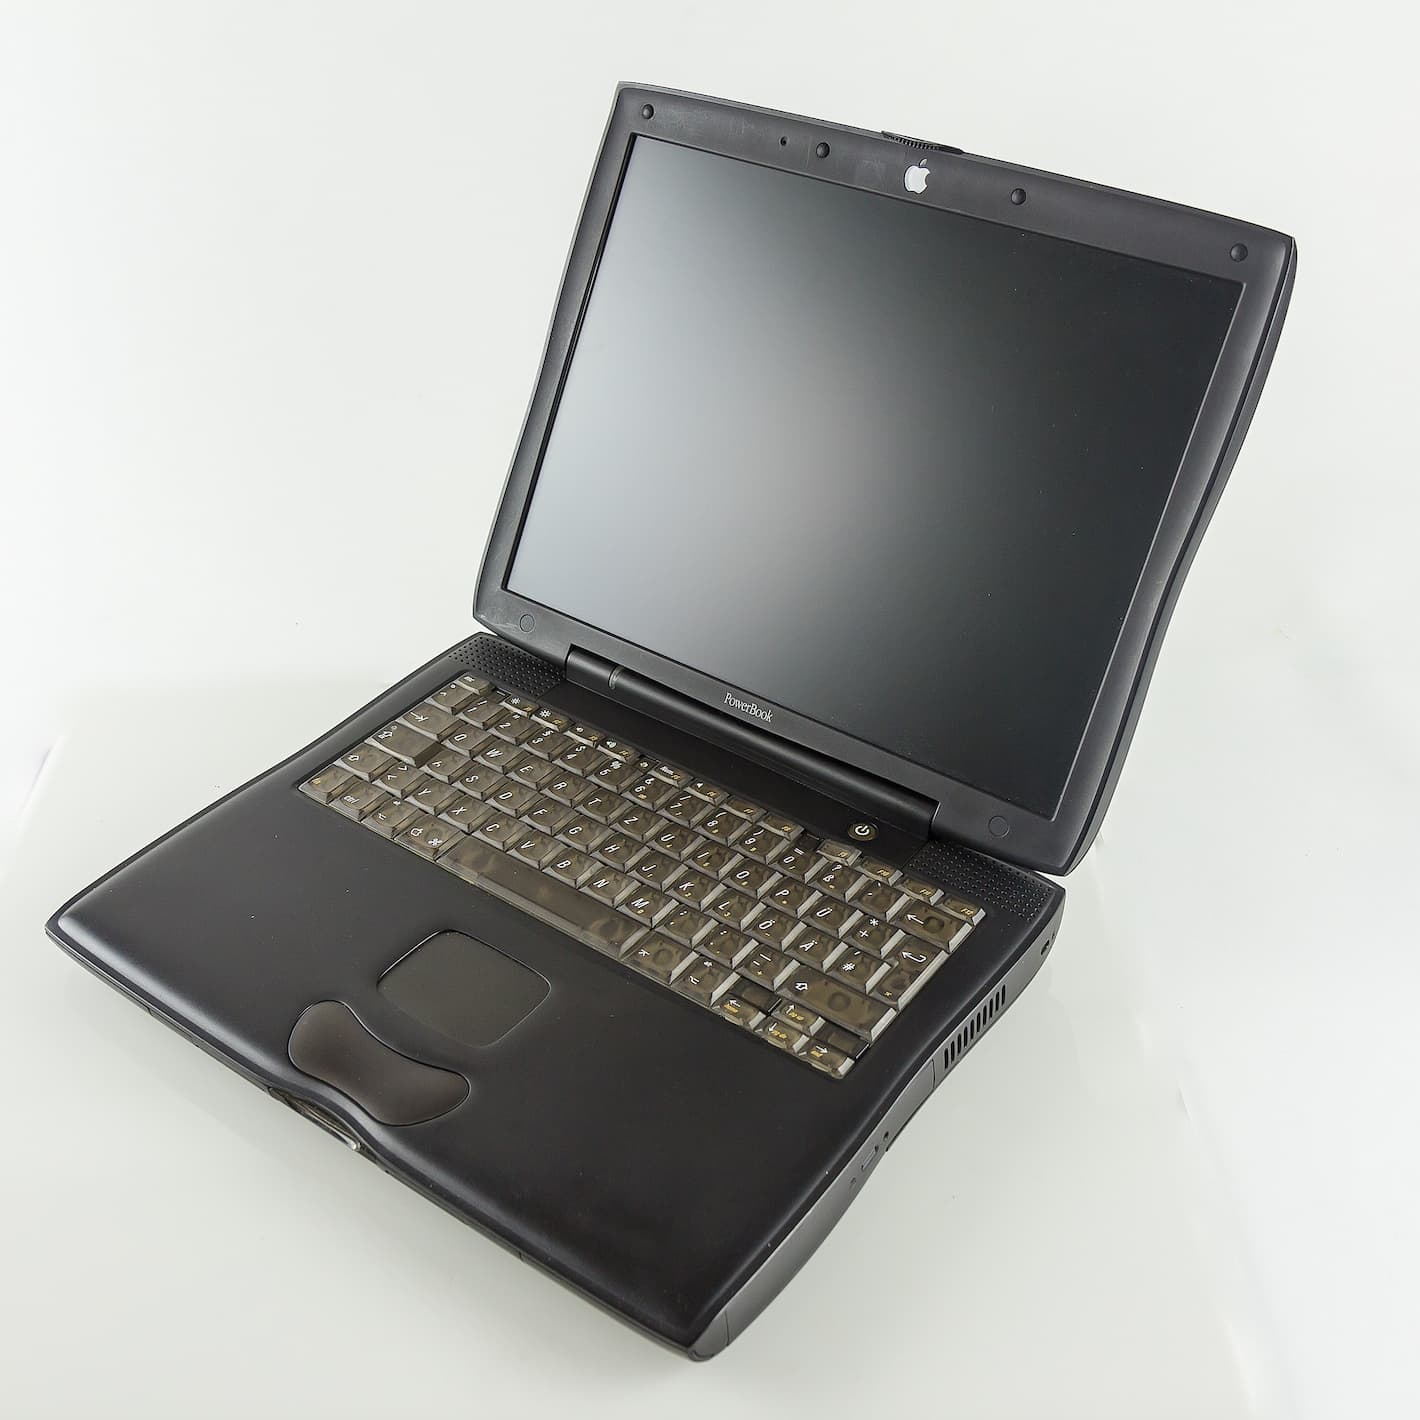 A PowerBook G3